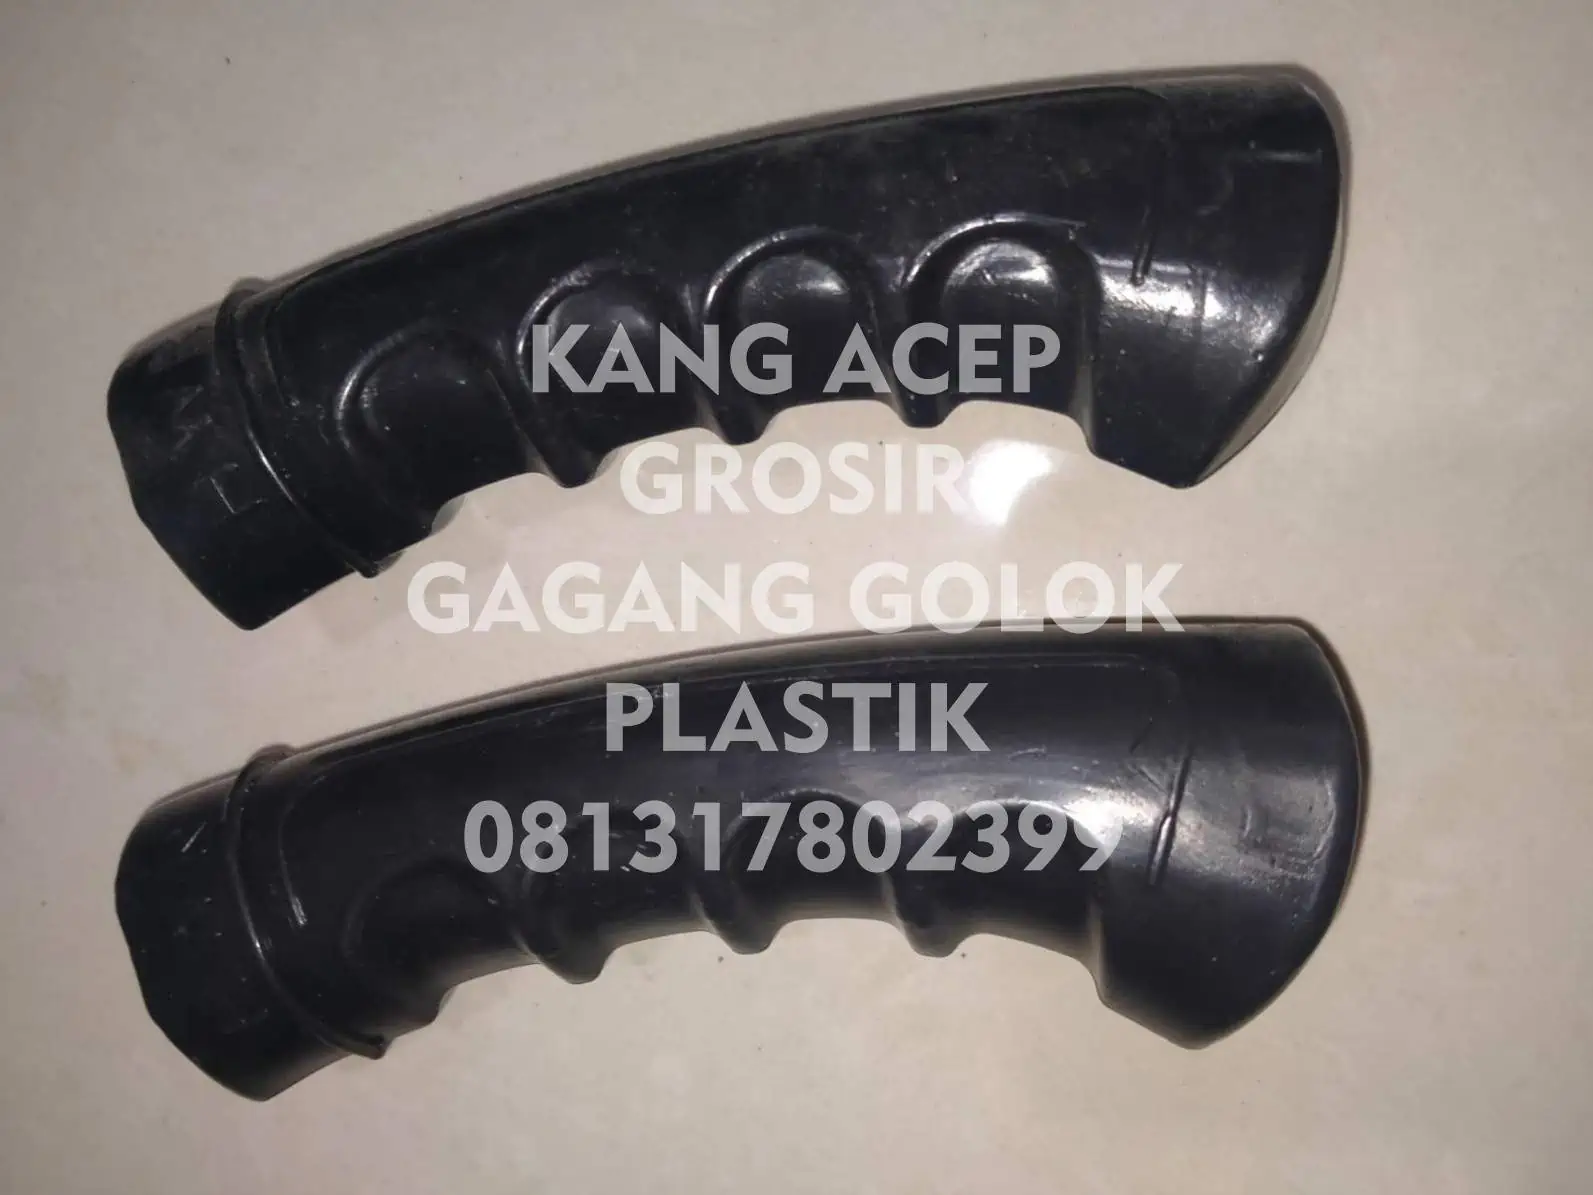 Grosir Gagang Golok Plastik di Bandung Model Tapak Hitam